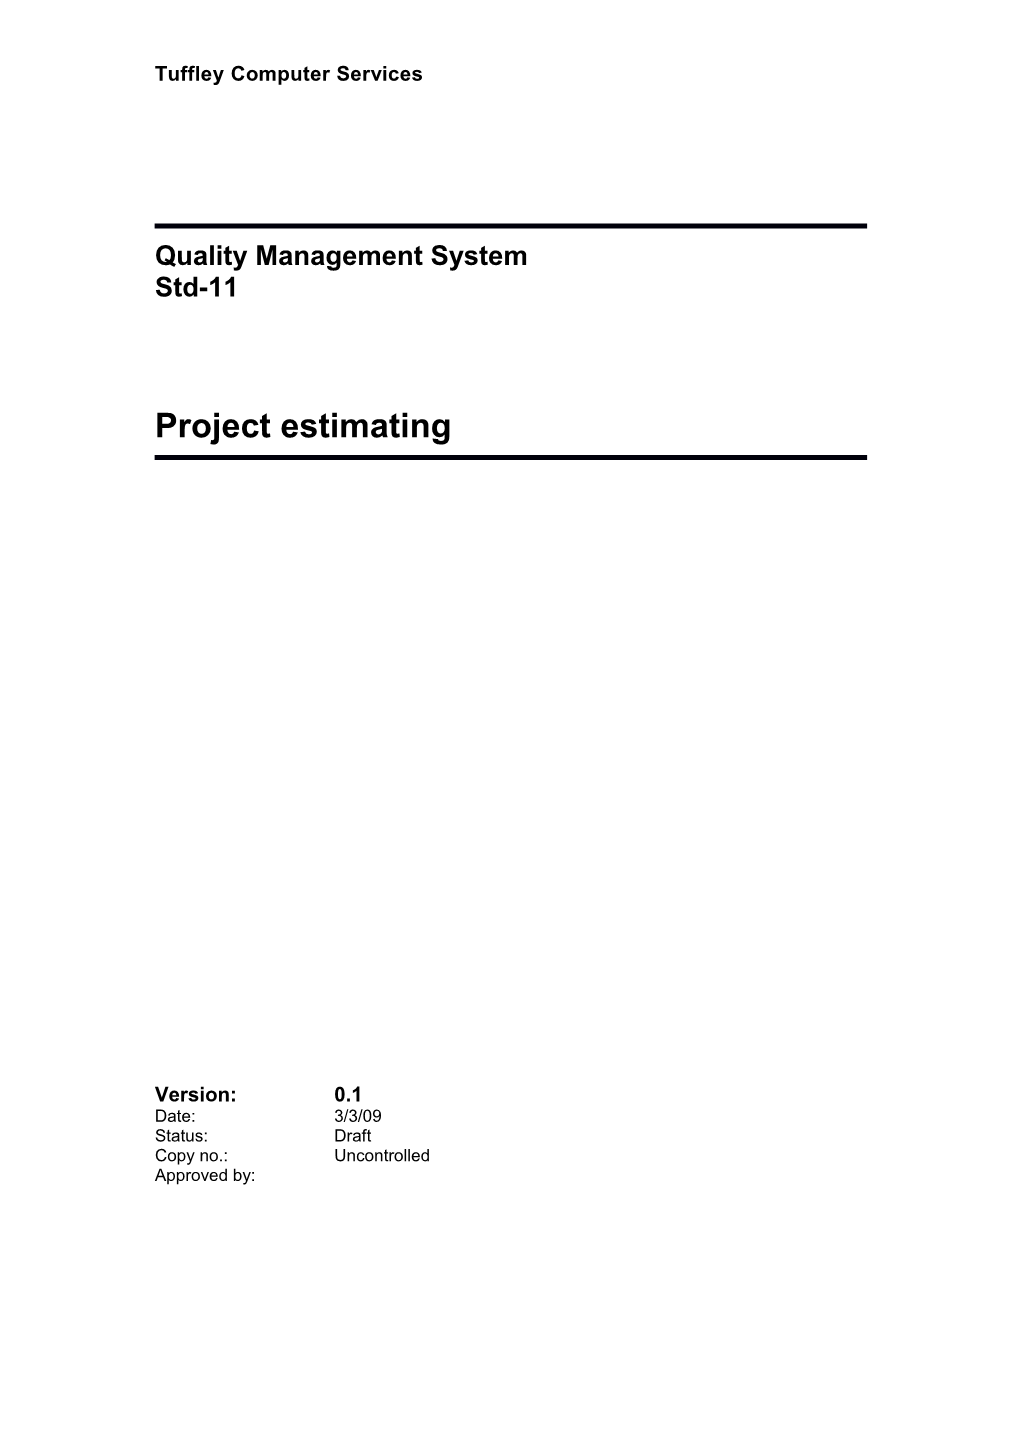 Document Production Standard (ST-1)